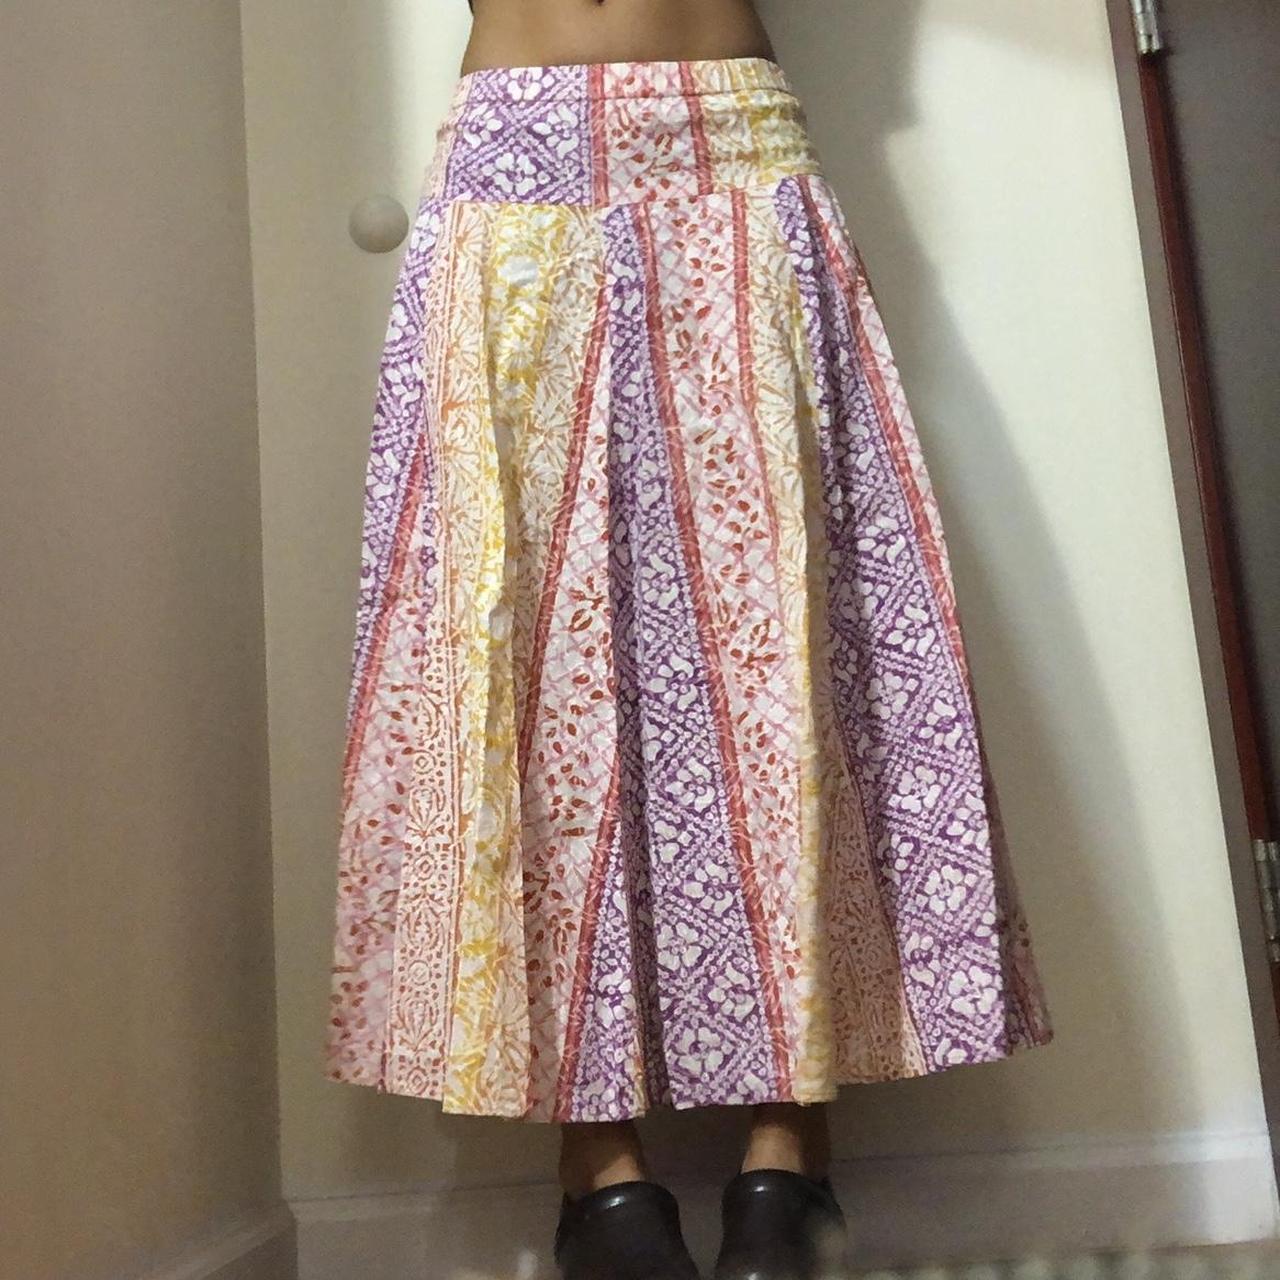 ANOKHI Women's White and Pink Skirt